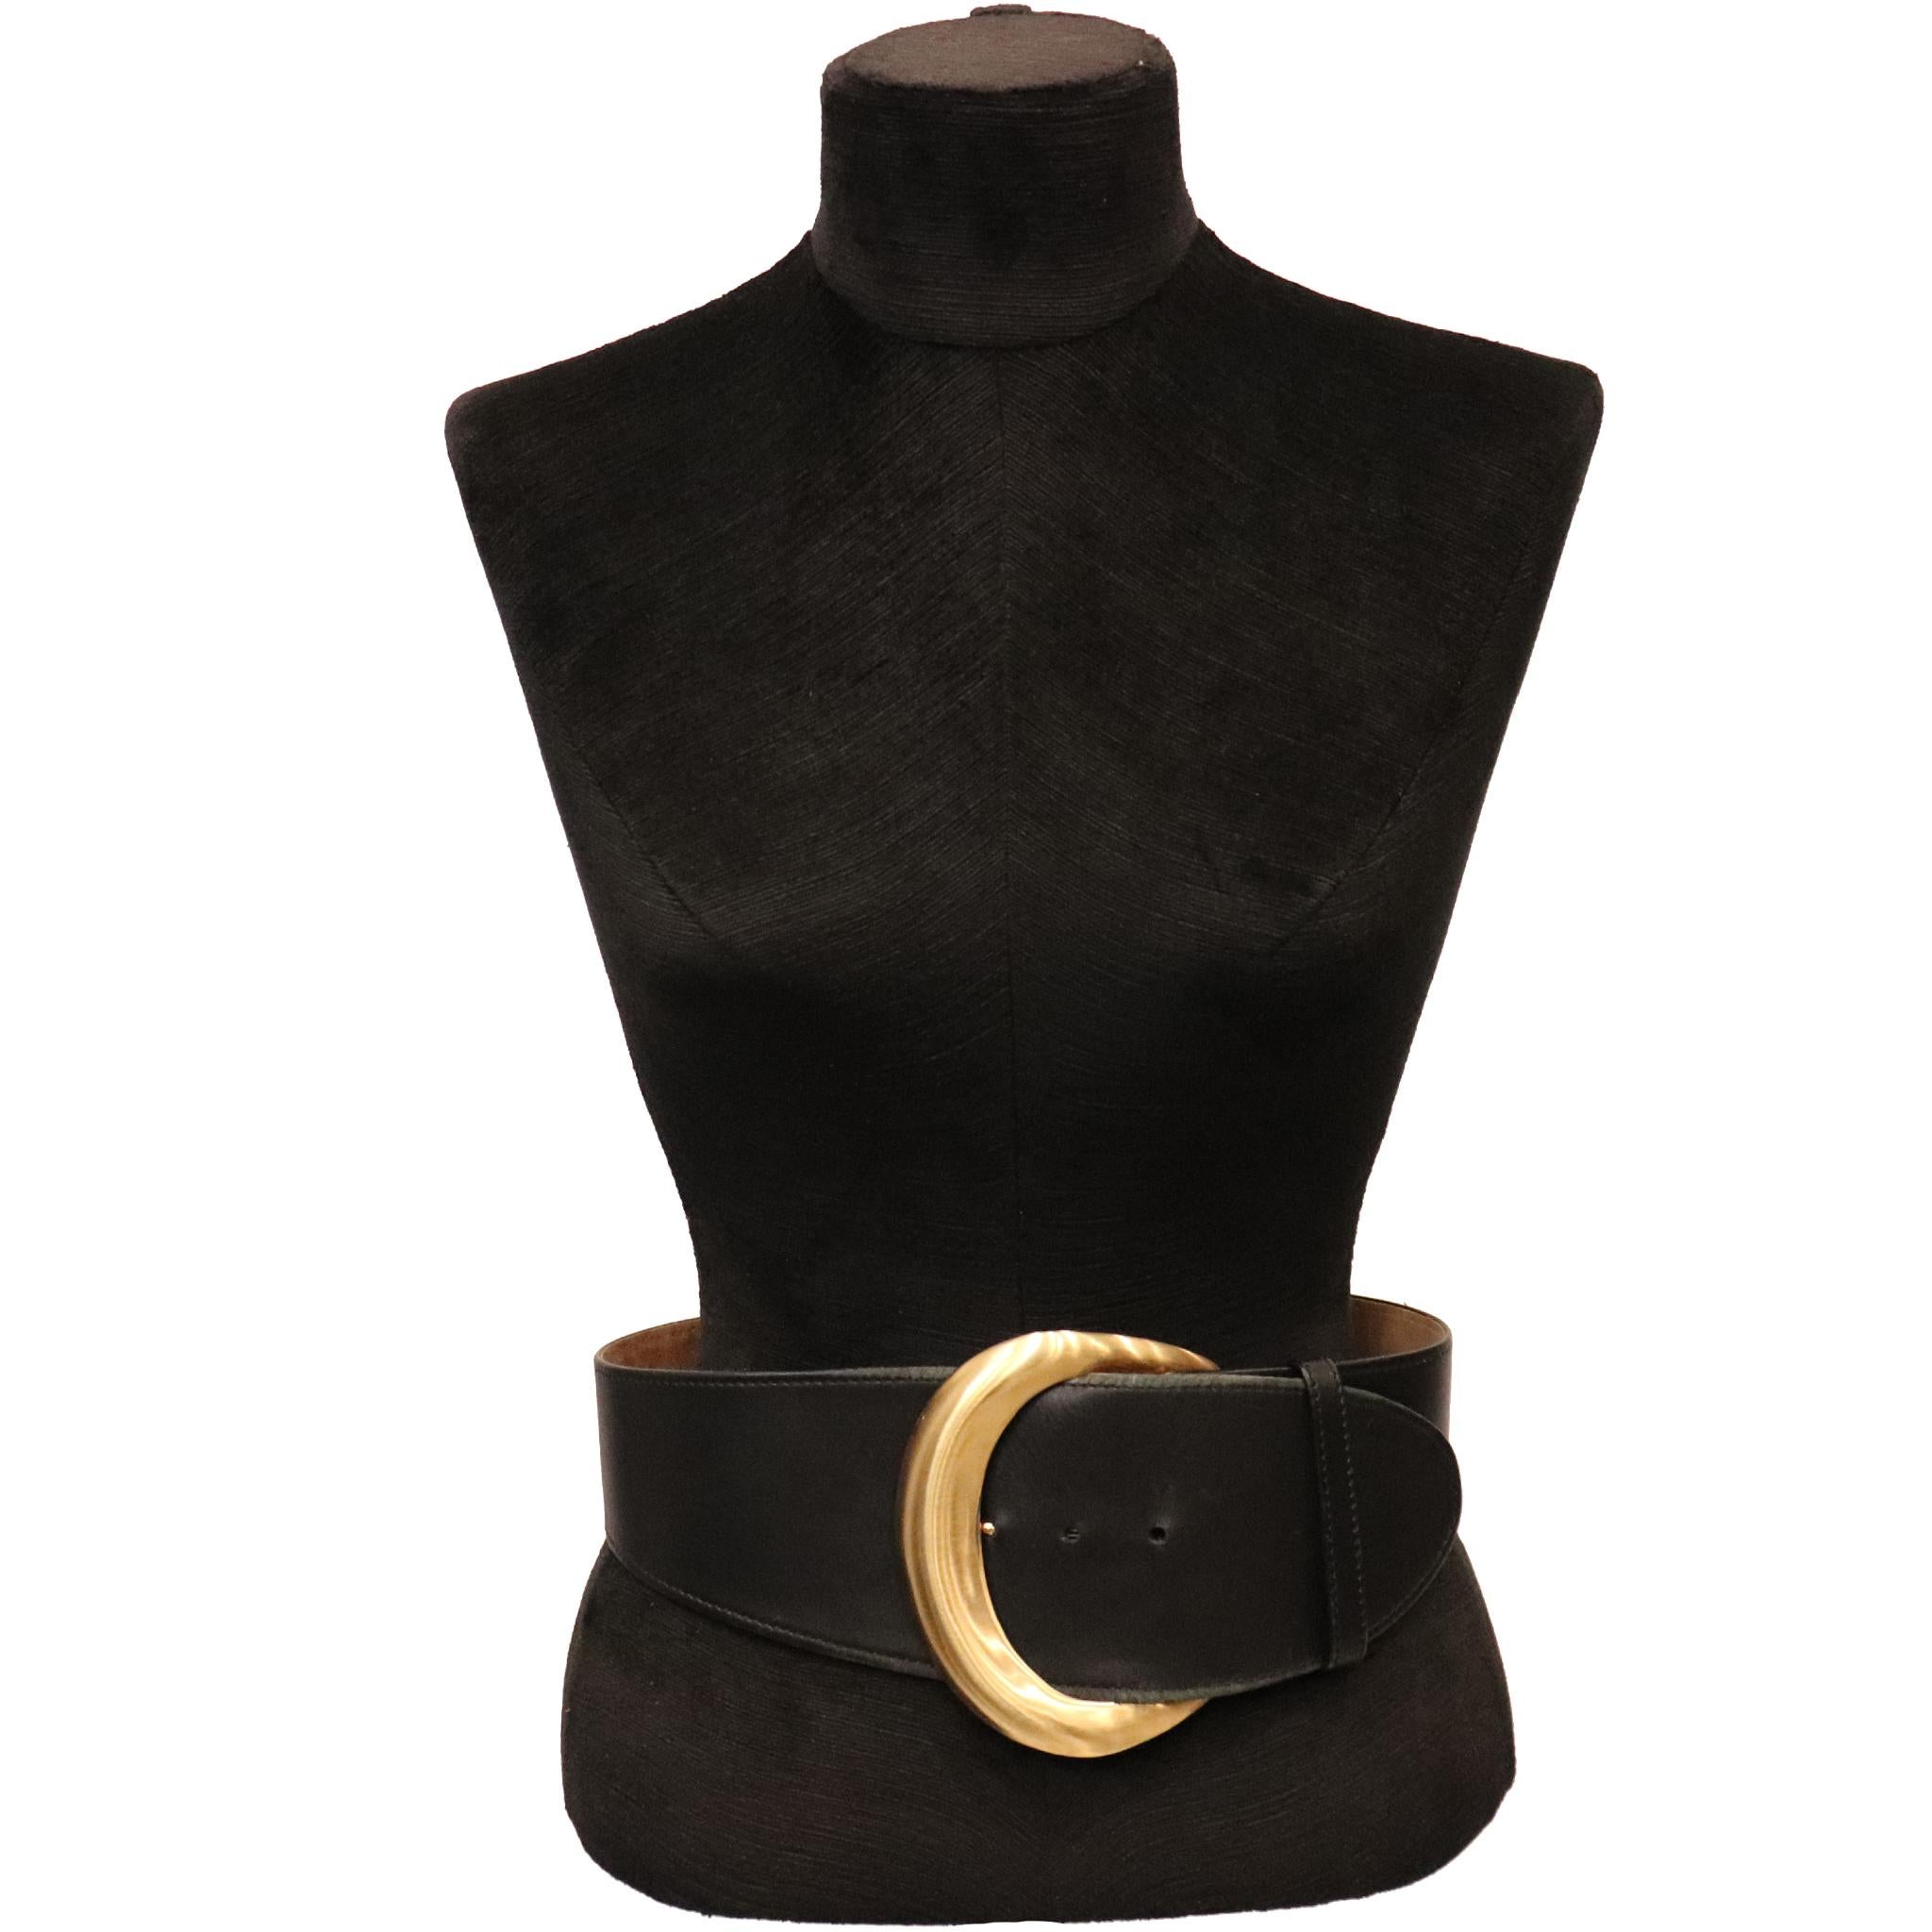 Donna Karan Black Leather Belt W/ Gold tone Buckle. In excellent condition,

Measurements:

Longest length - 29.5 inches
Shortest length - 27 inches
Width - 4 inches